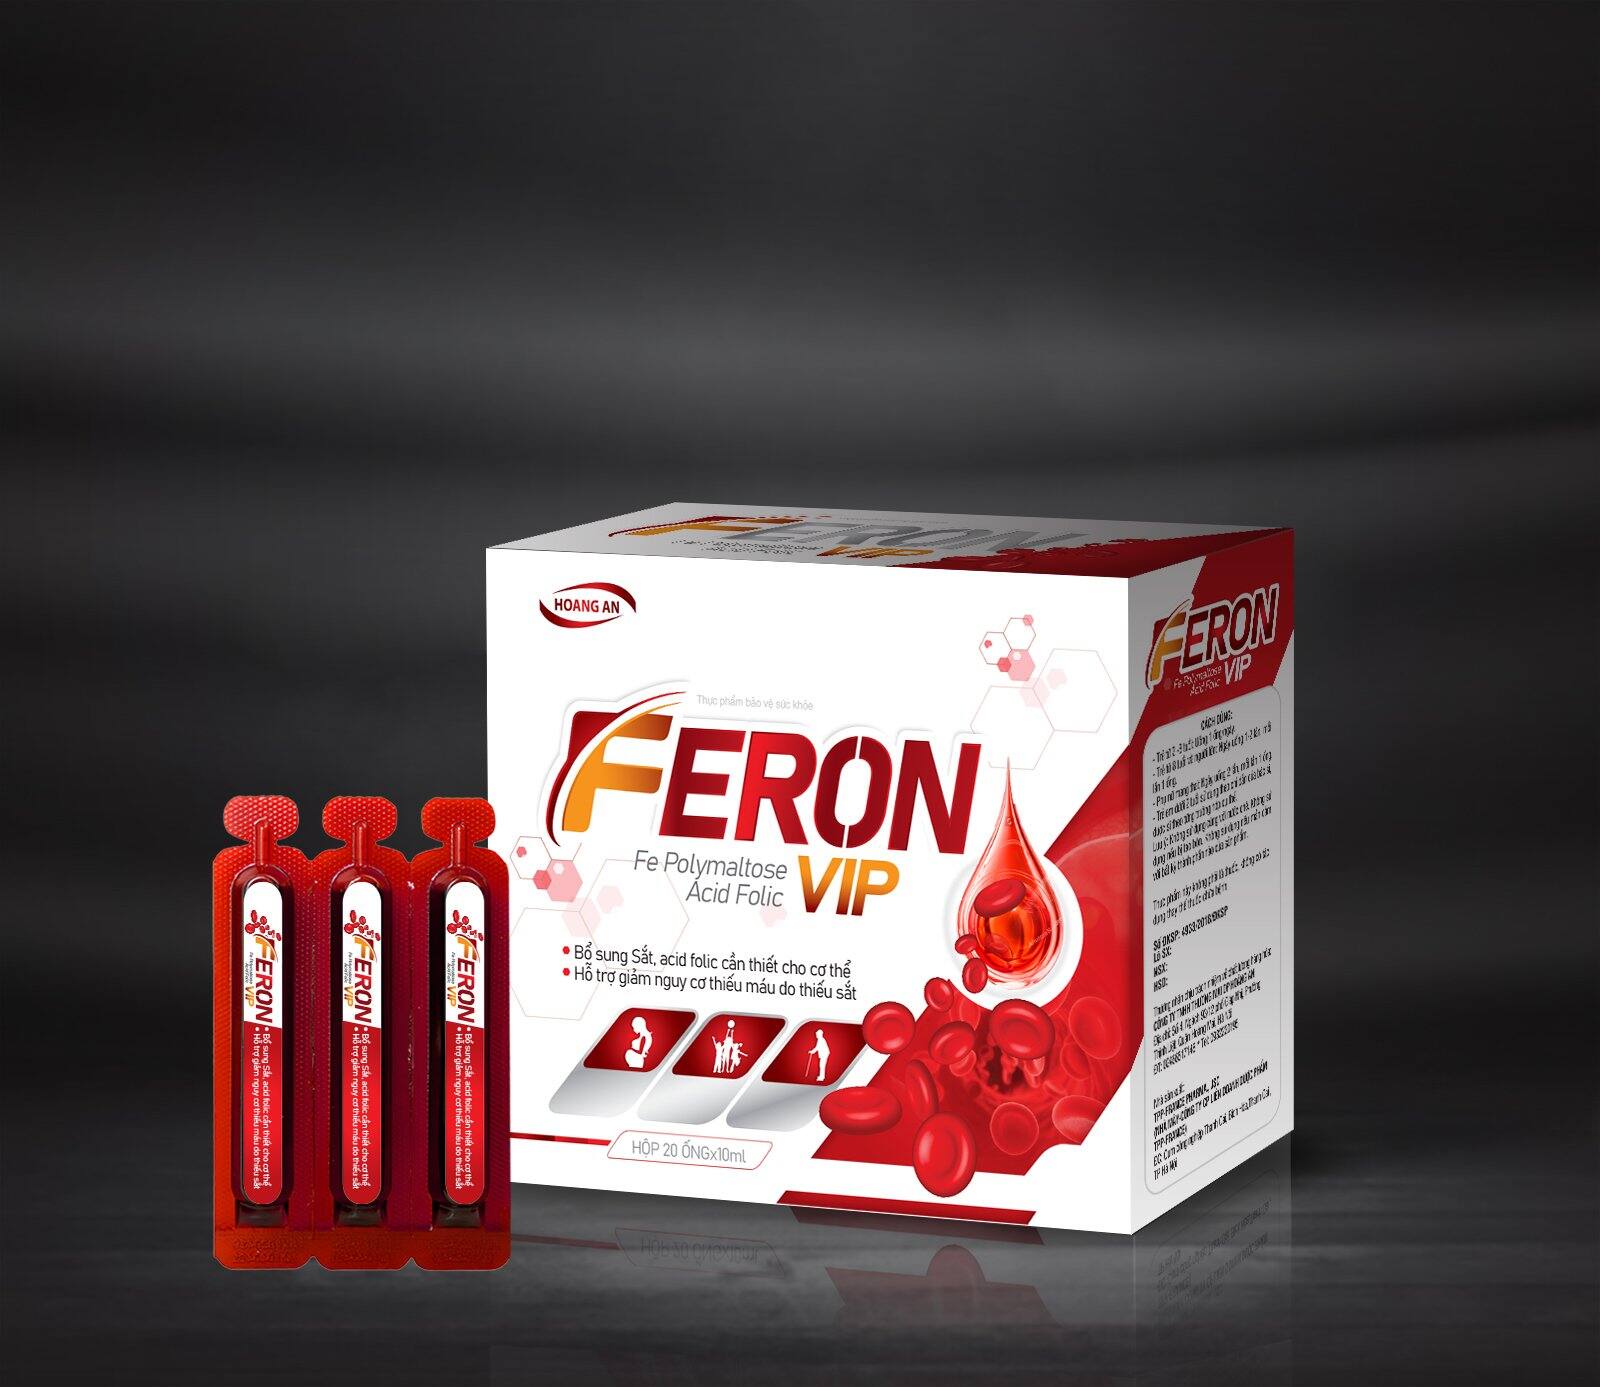 Sắt Feron vip  Bổ sung sắt, Acid folic cho phụ nữ mang thai và cho con